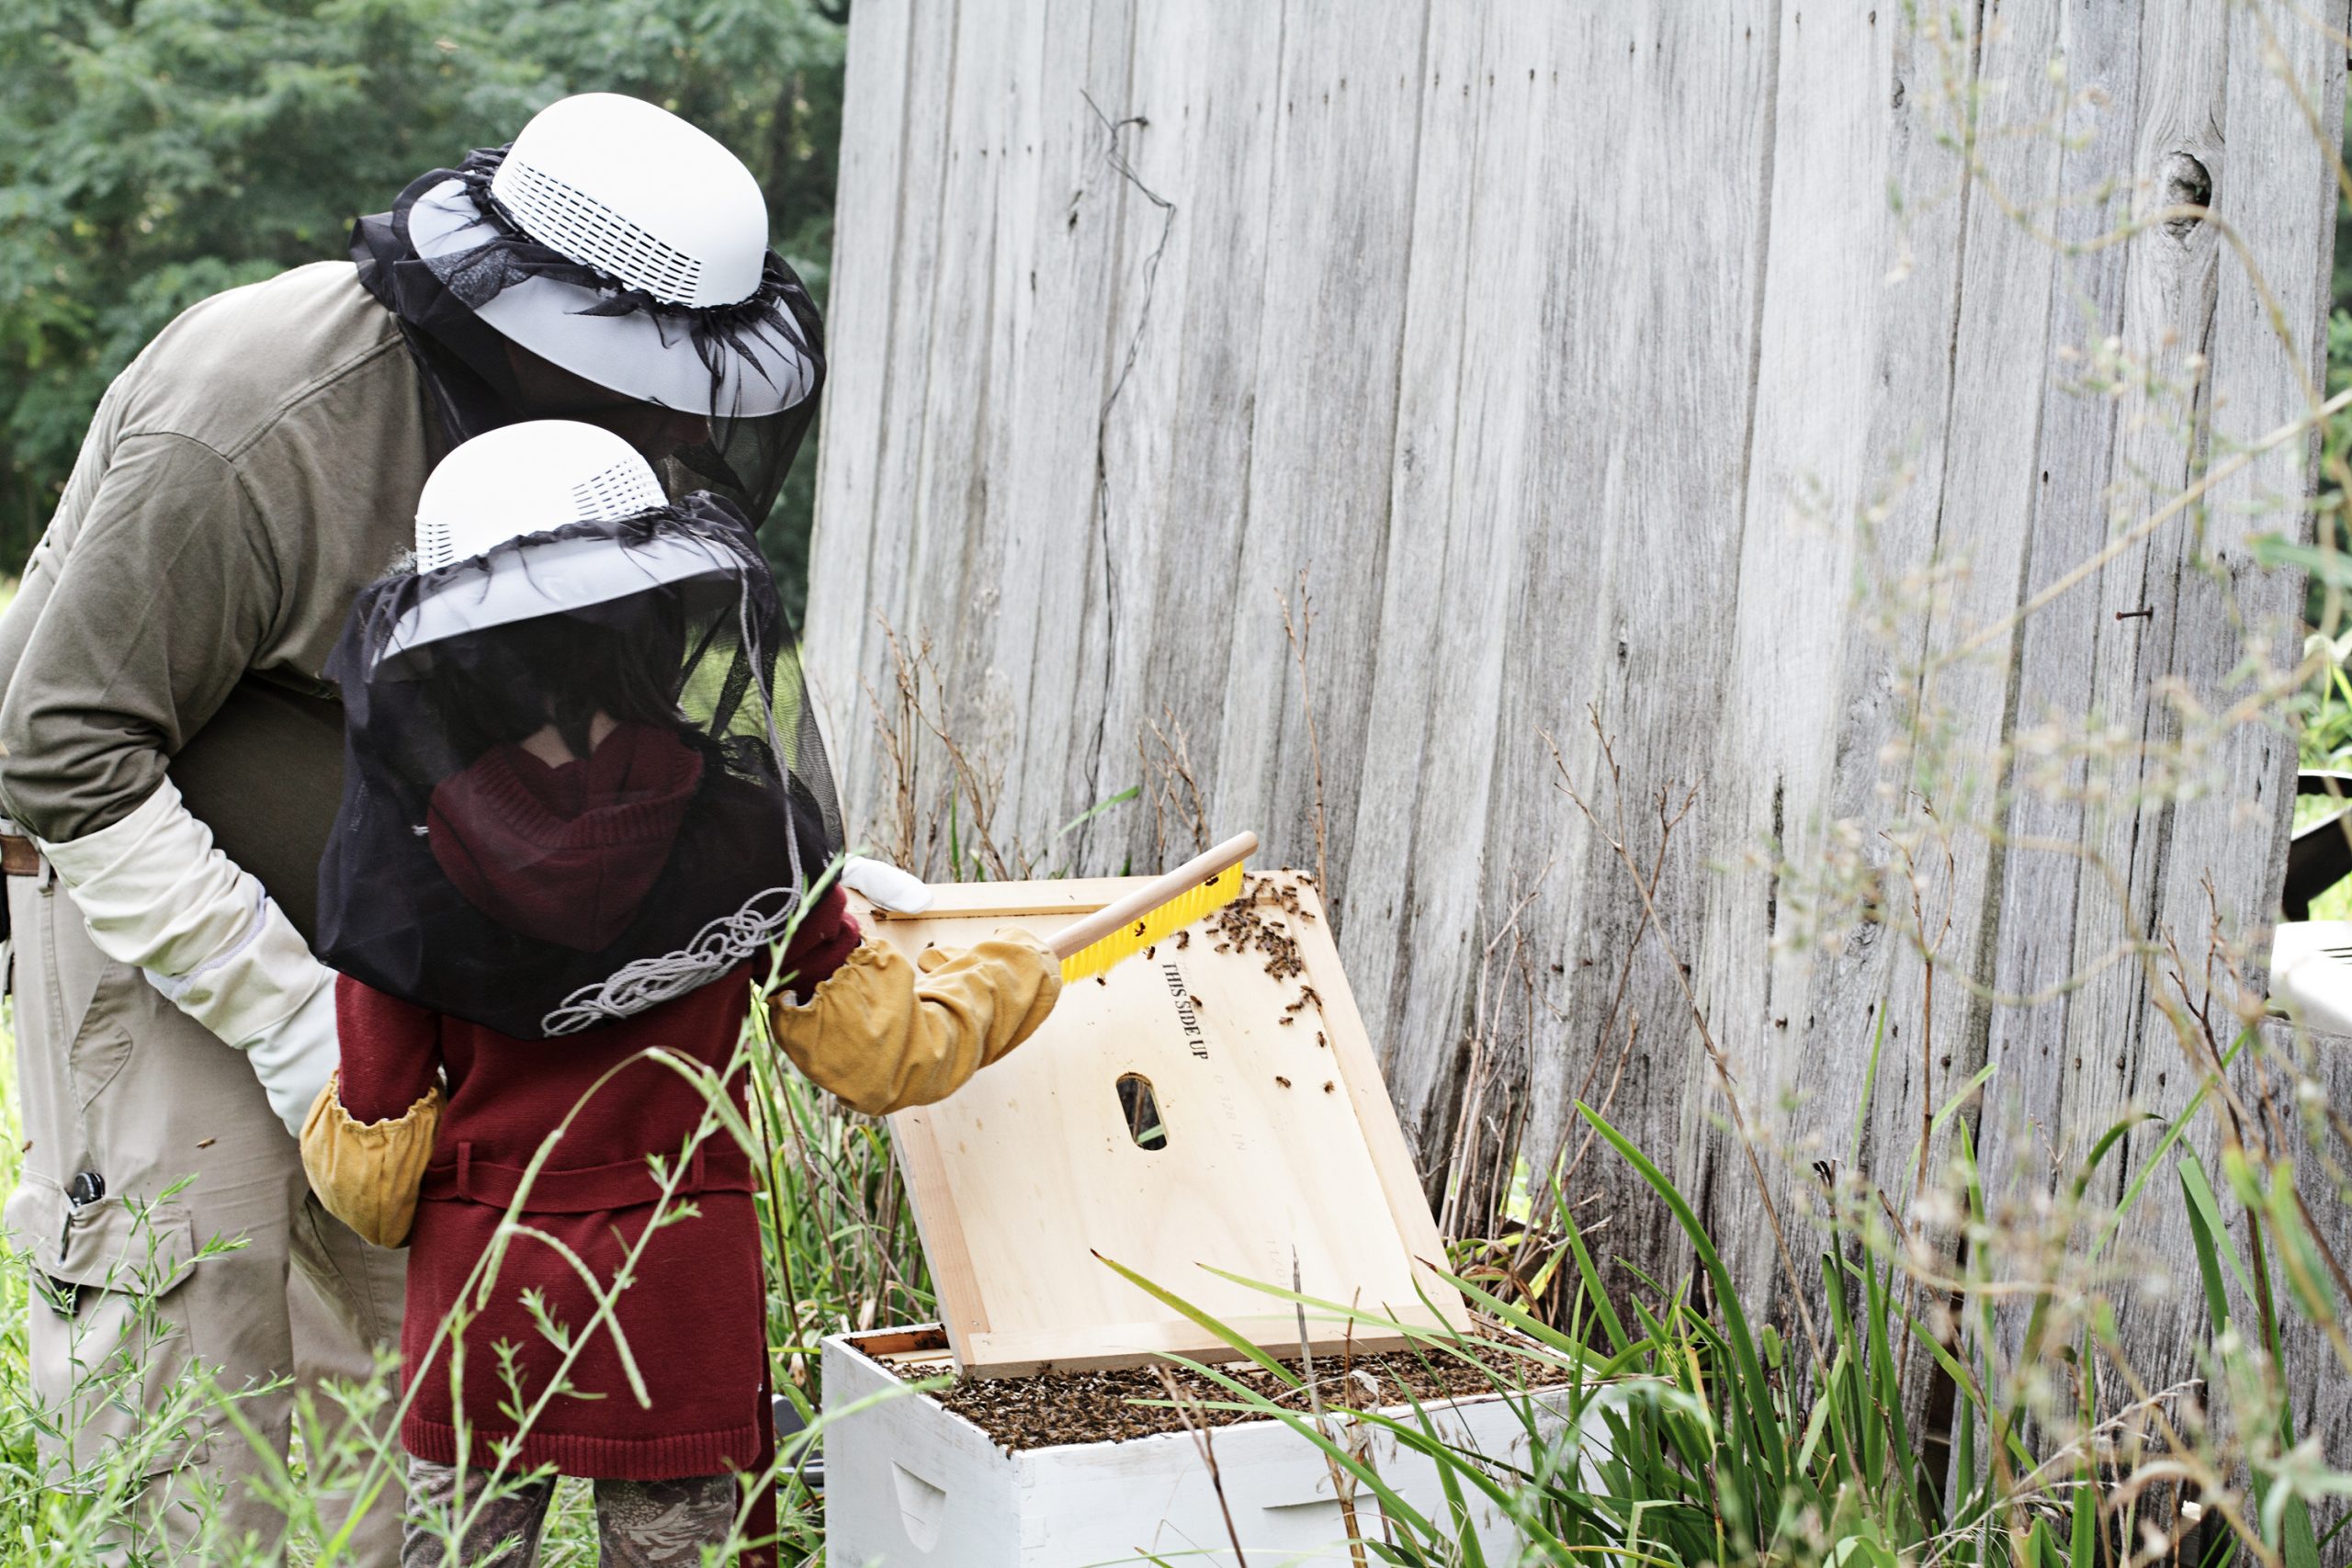 Beekeeping Family Keeping Legacy Alive